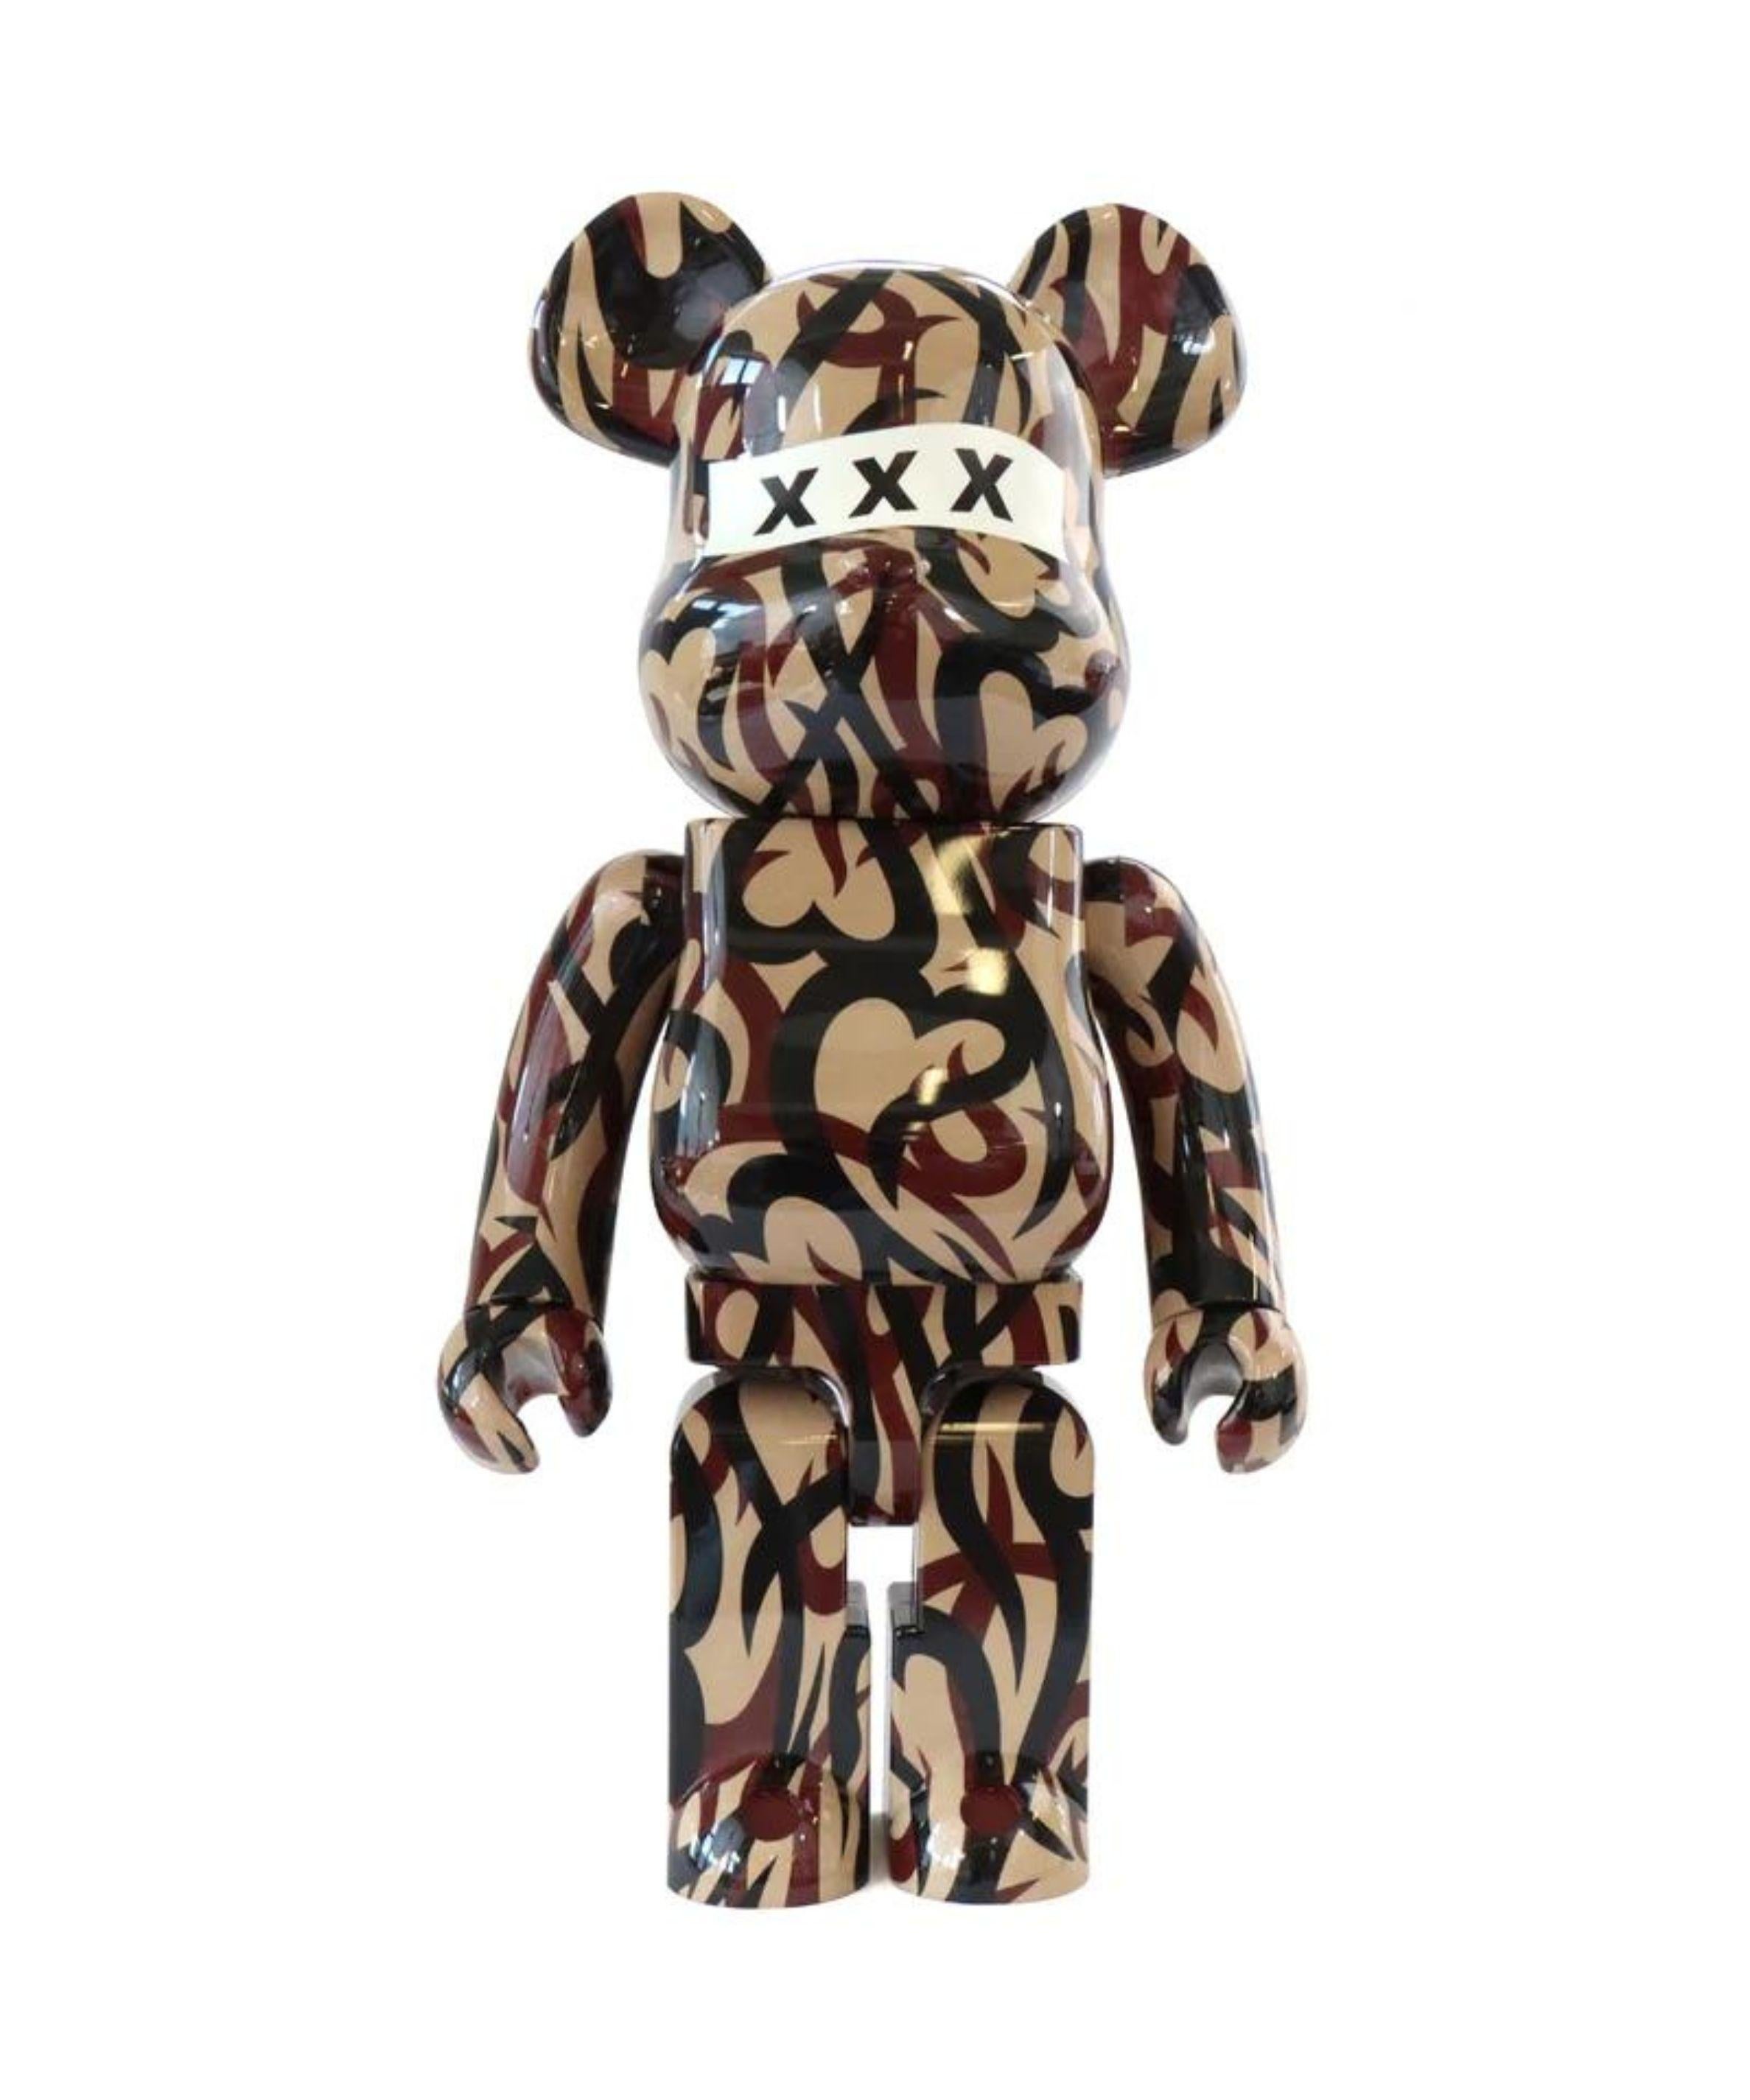 1000% Bearbrick Number (N) XXX - Sculpture by  Medicom Toy